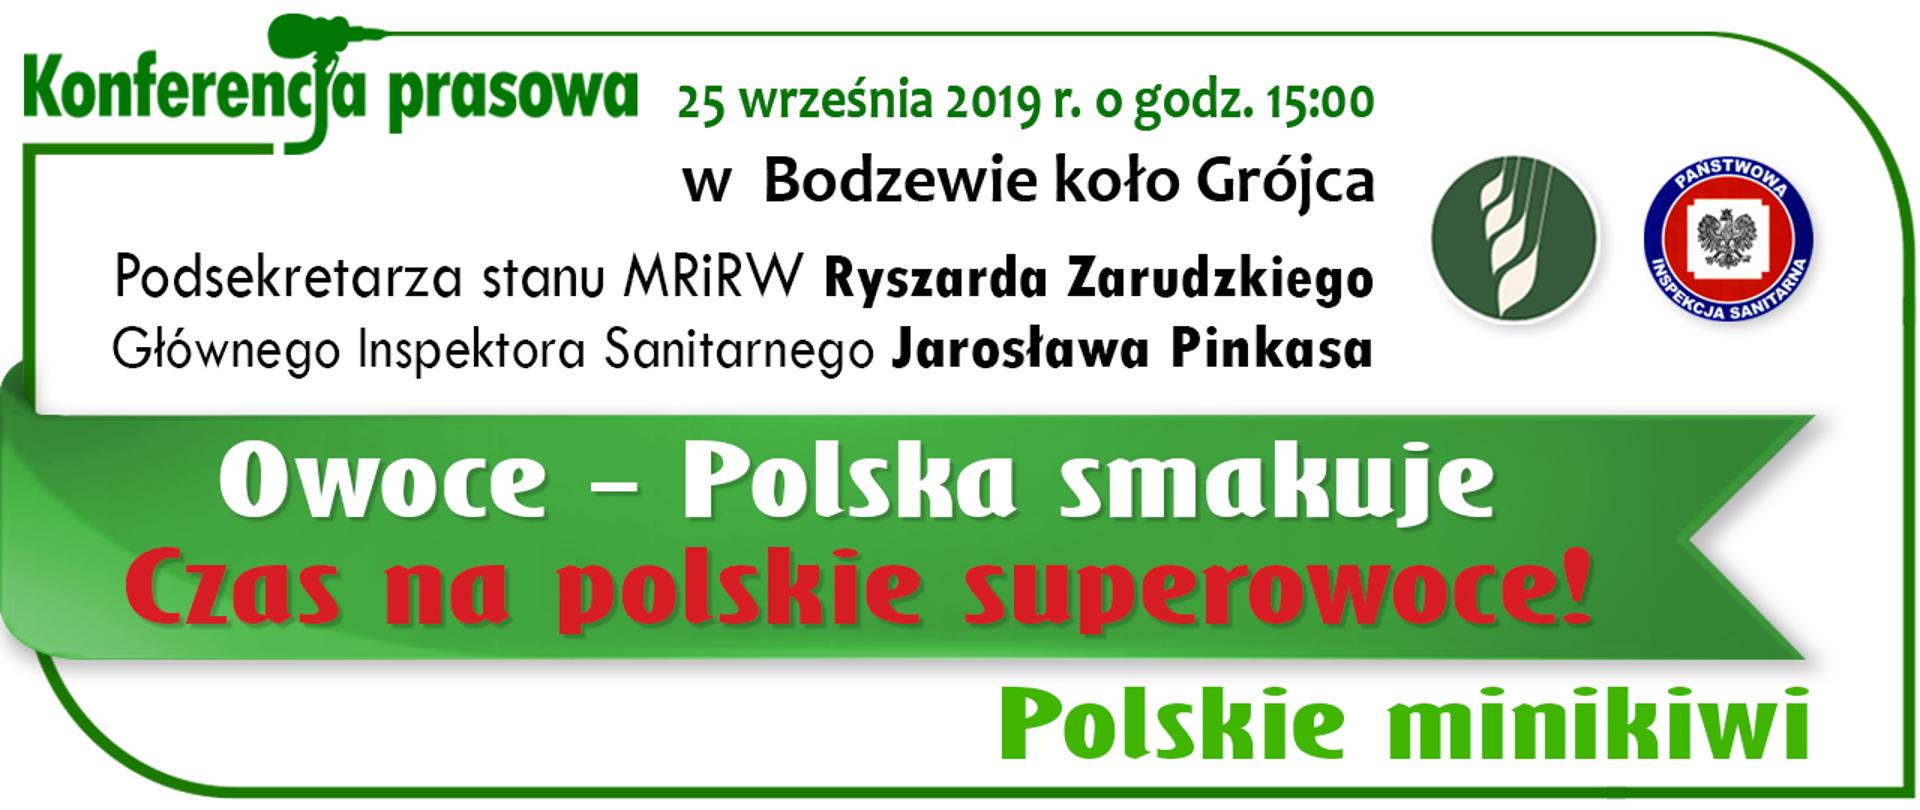 Polska smakuje - Minikiwi - konferencja